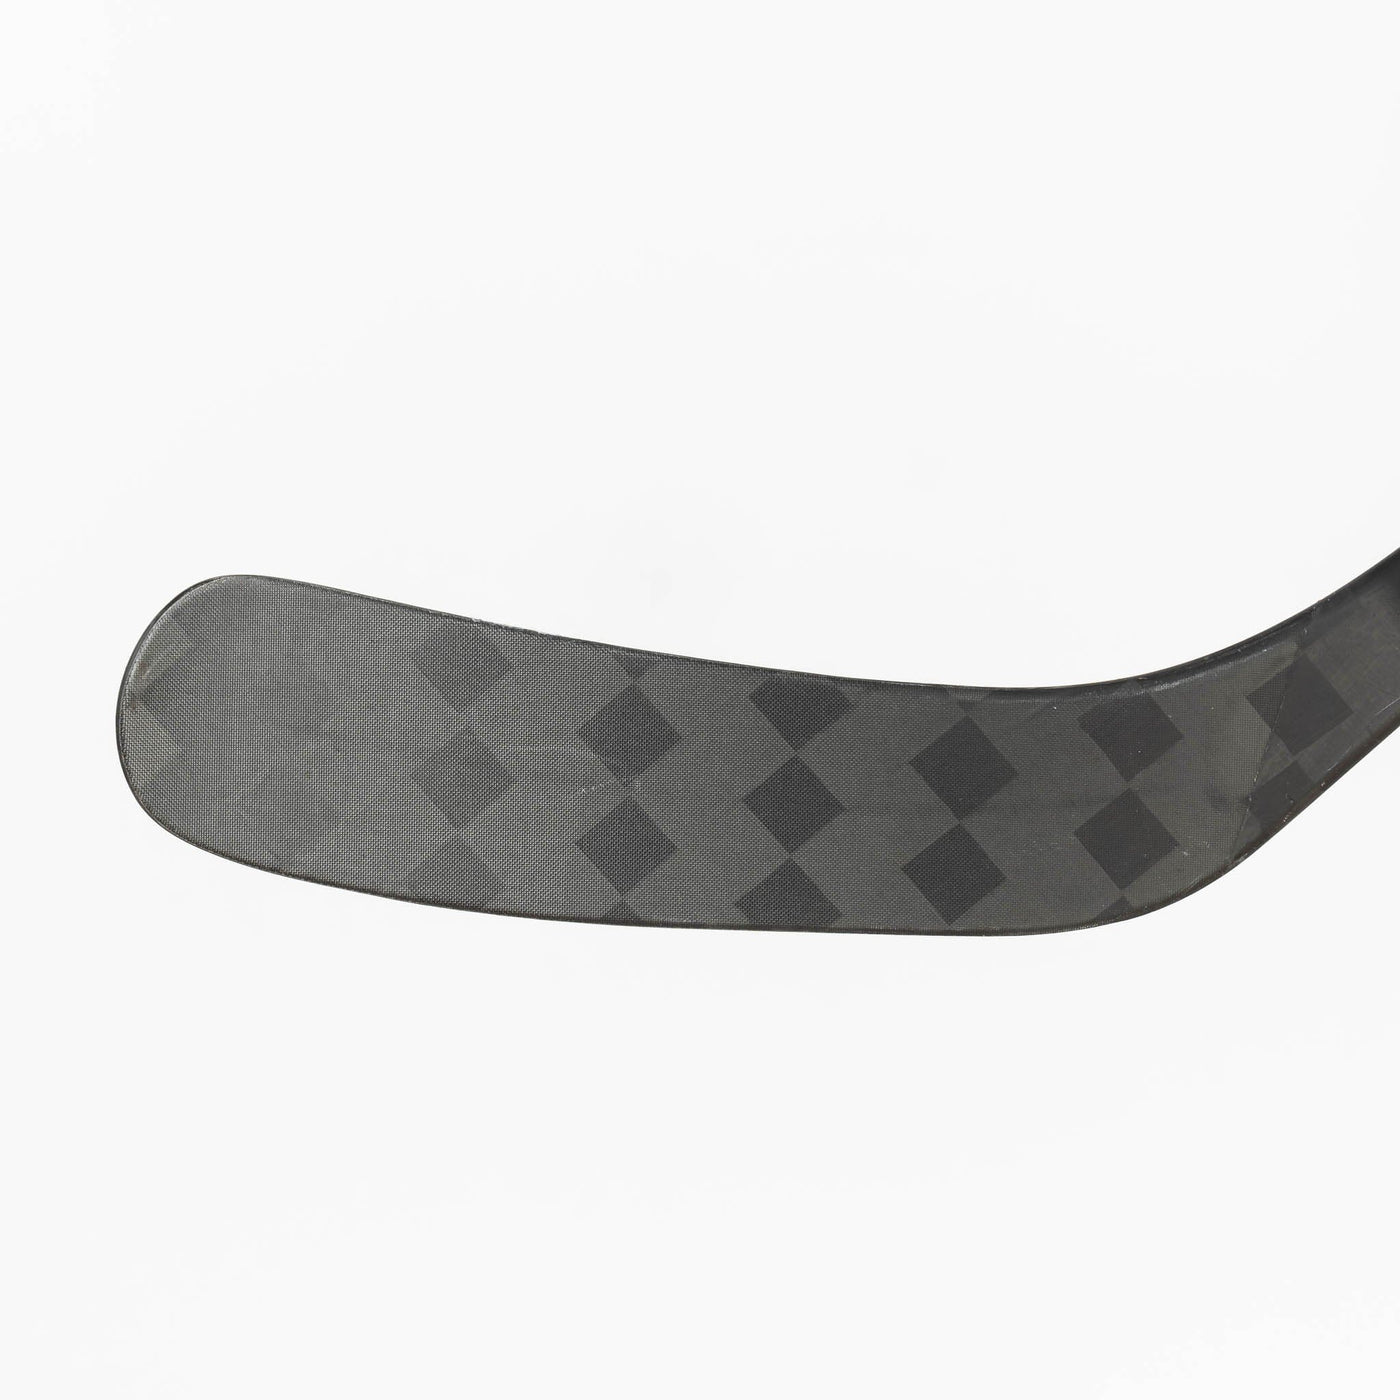 CCM Jetspeed FT5 Pro Junior Hockey Stick - The Hockey Shop Source For Sports